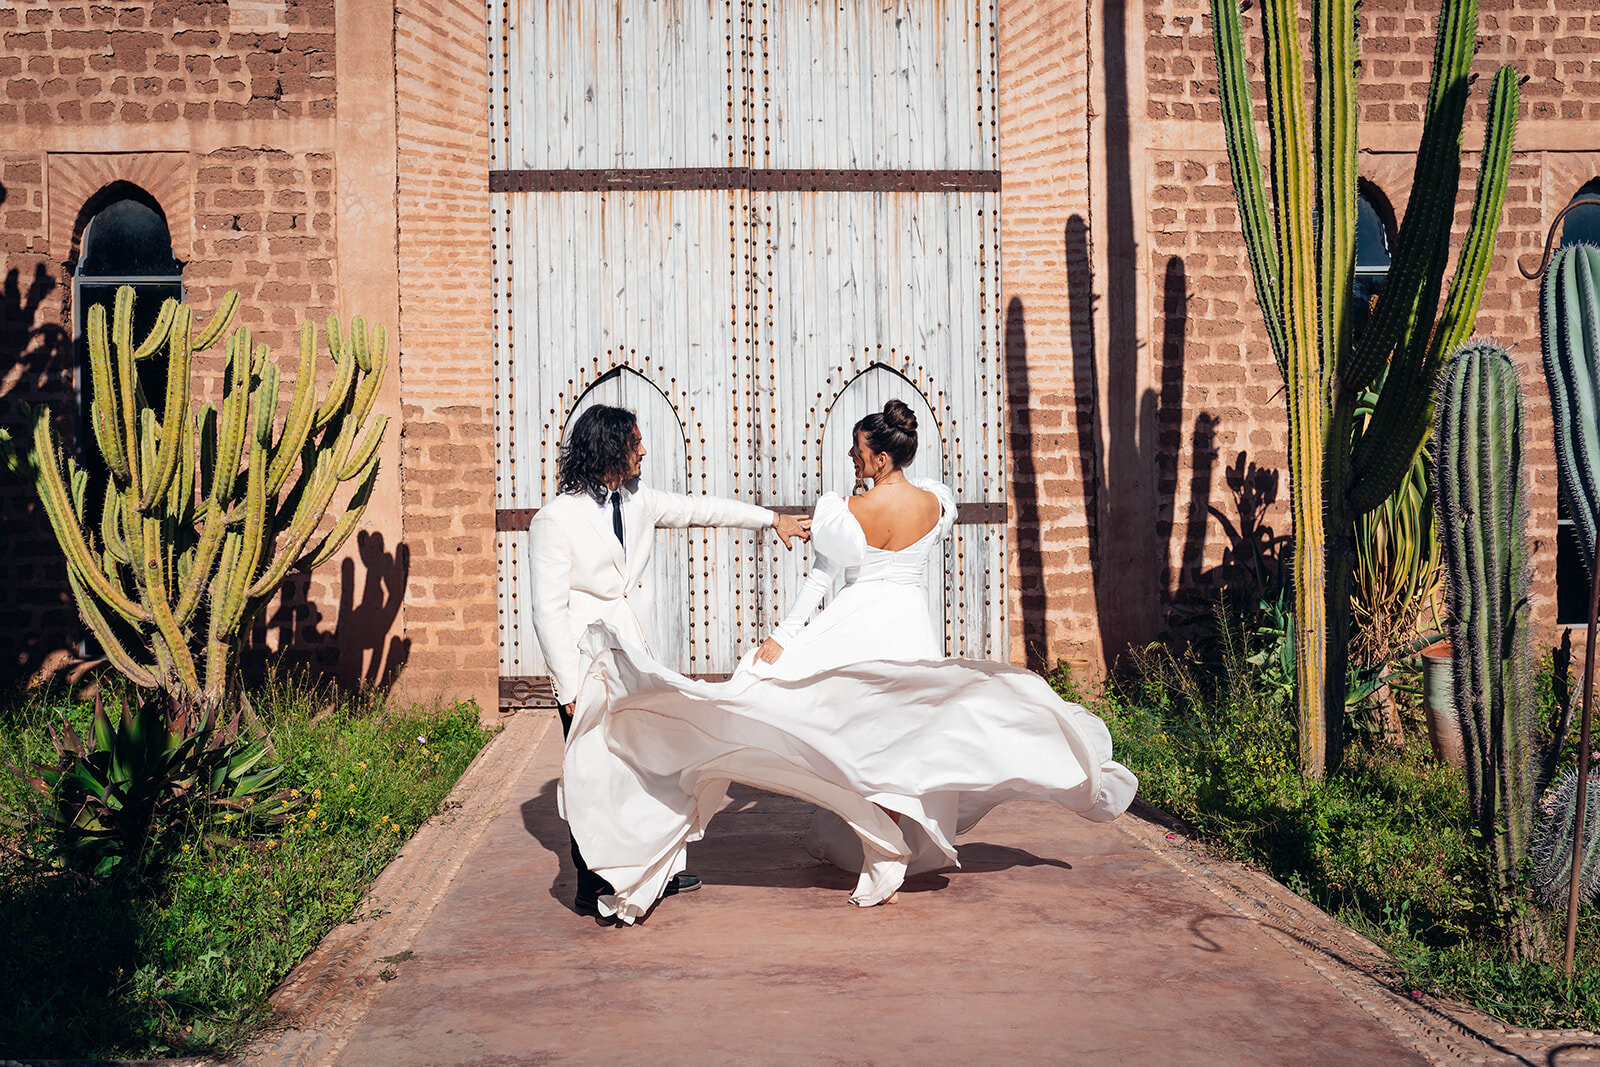 Wedding Elopment Photoshoot, taken at Beldi Country Club, Marrakech